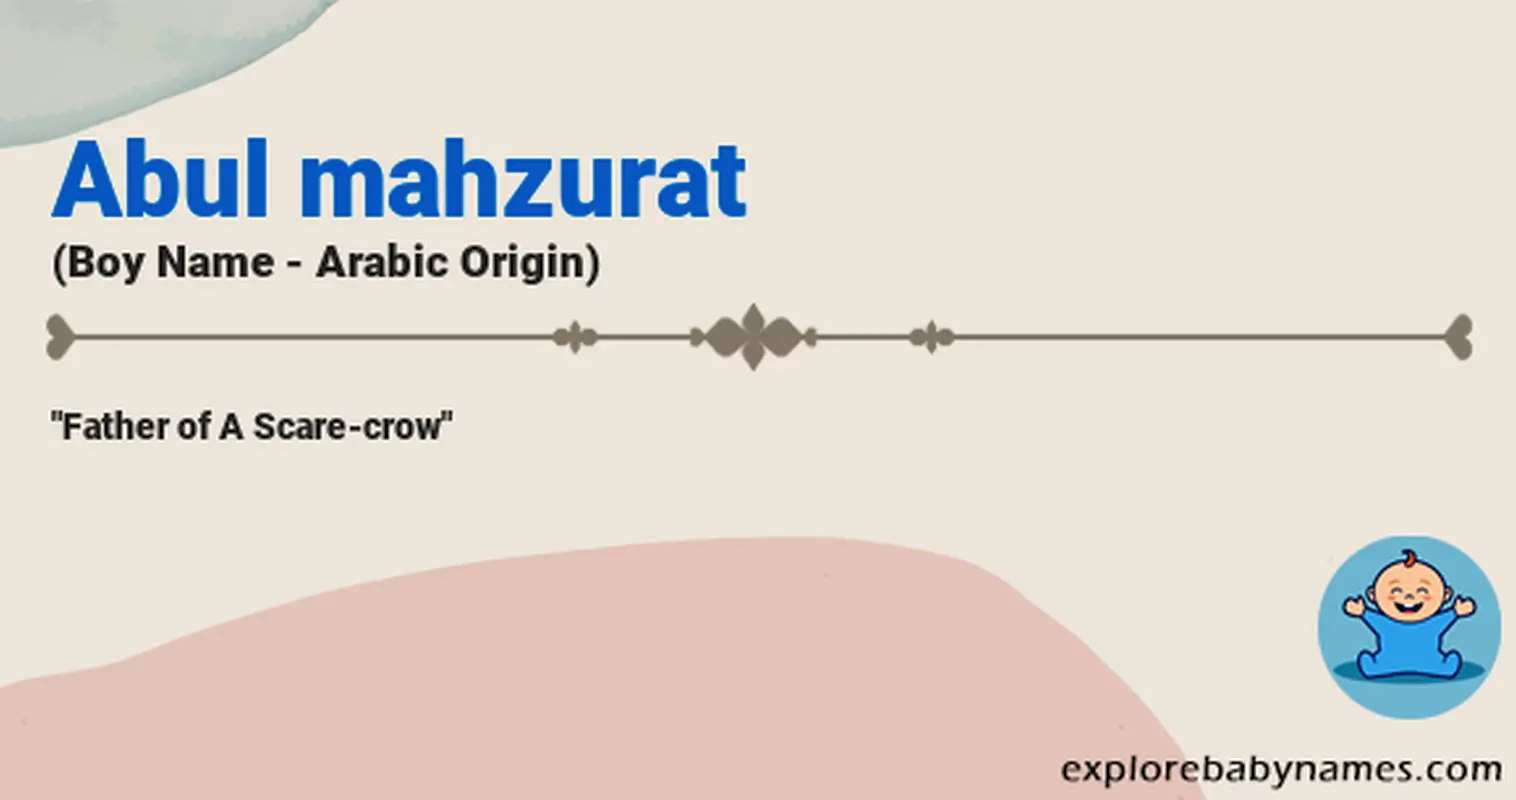 Meaning of Abul mahzurat